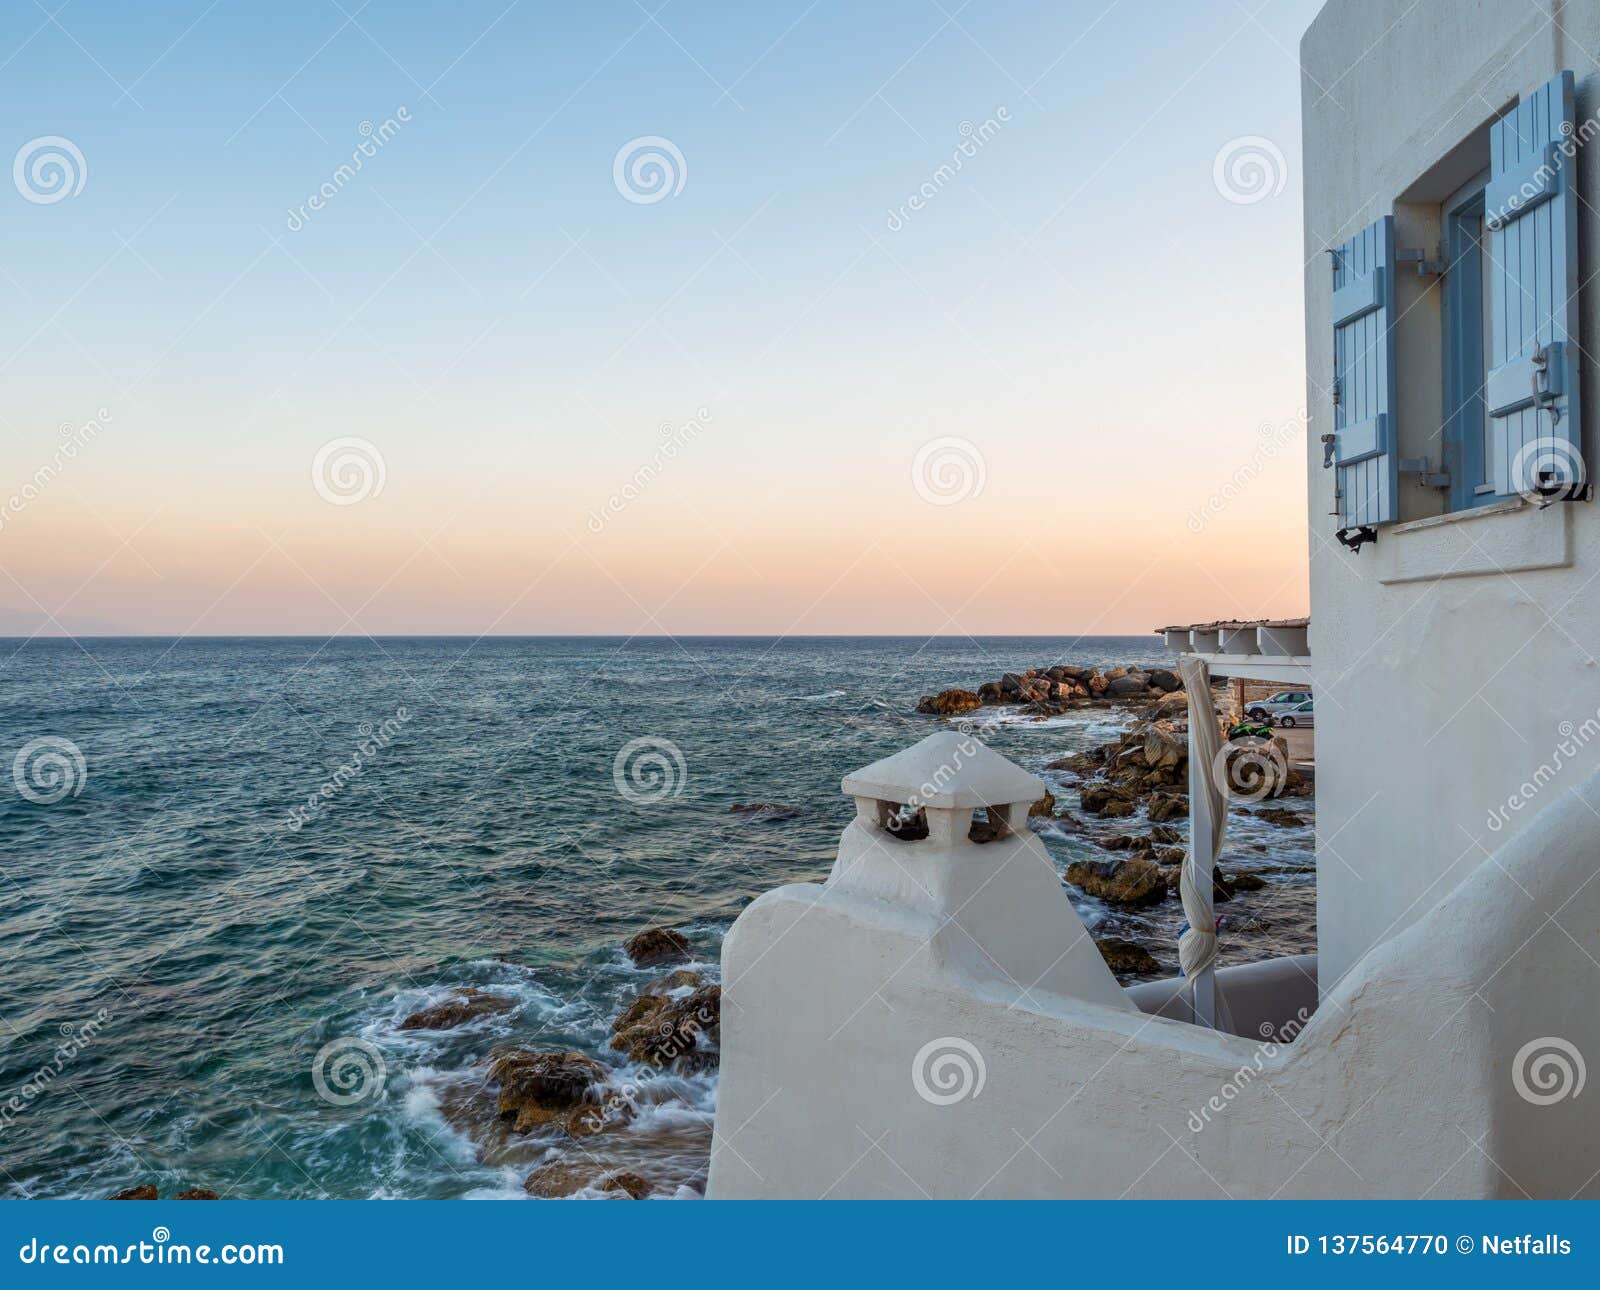 piso livadi beach on paros greece island